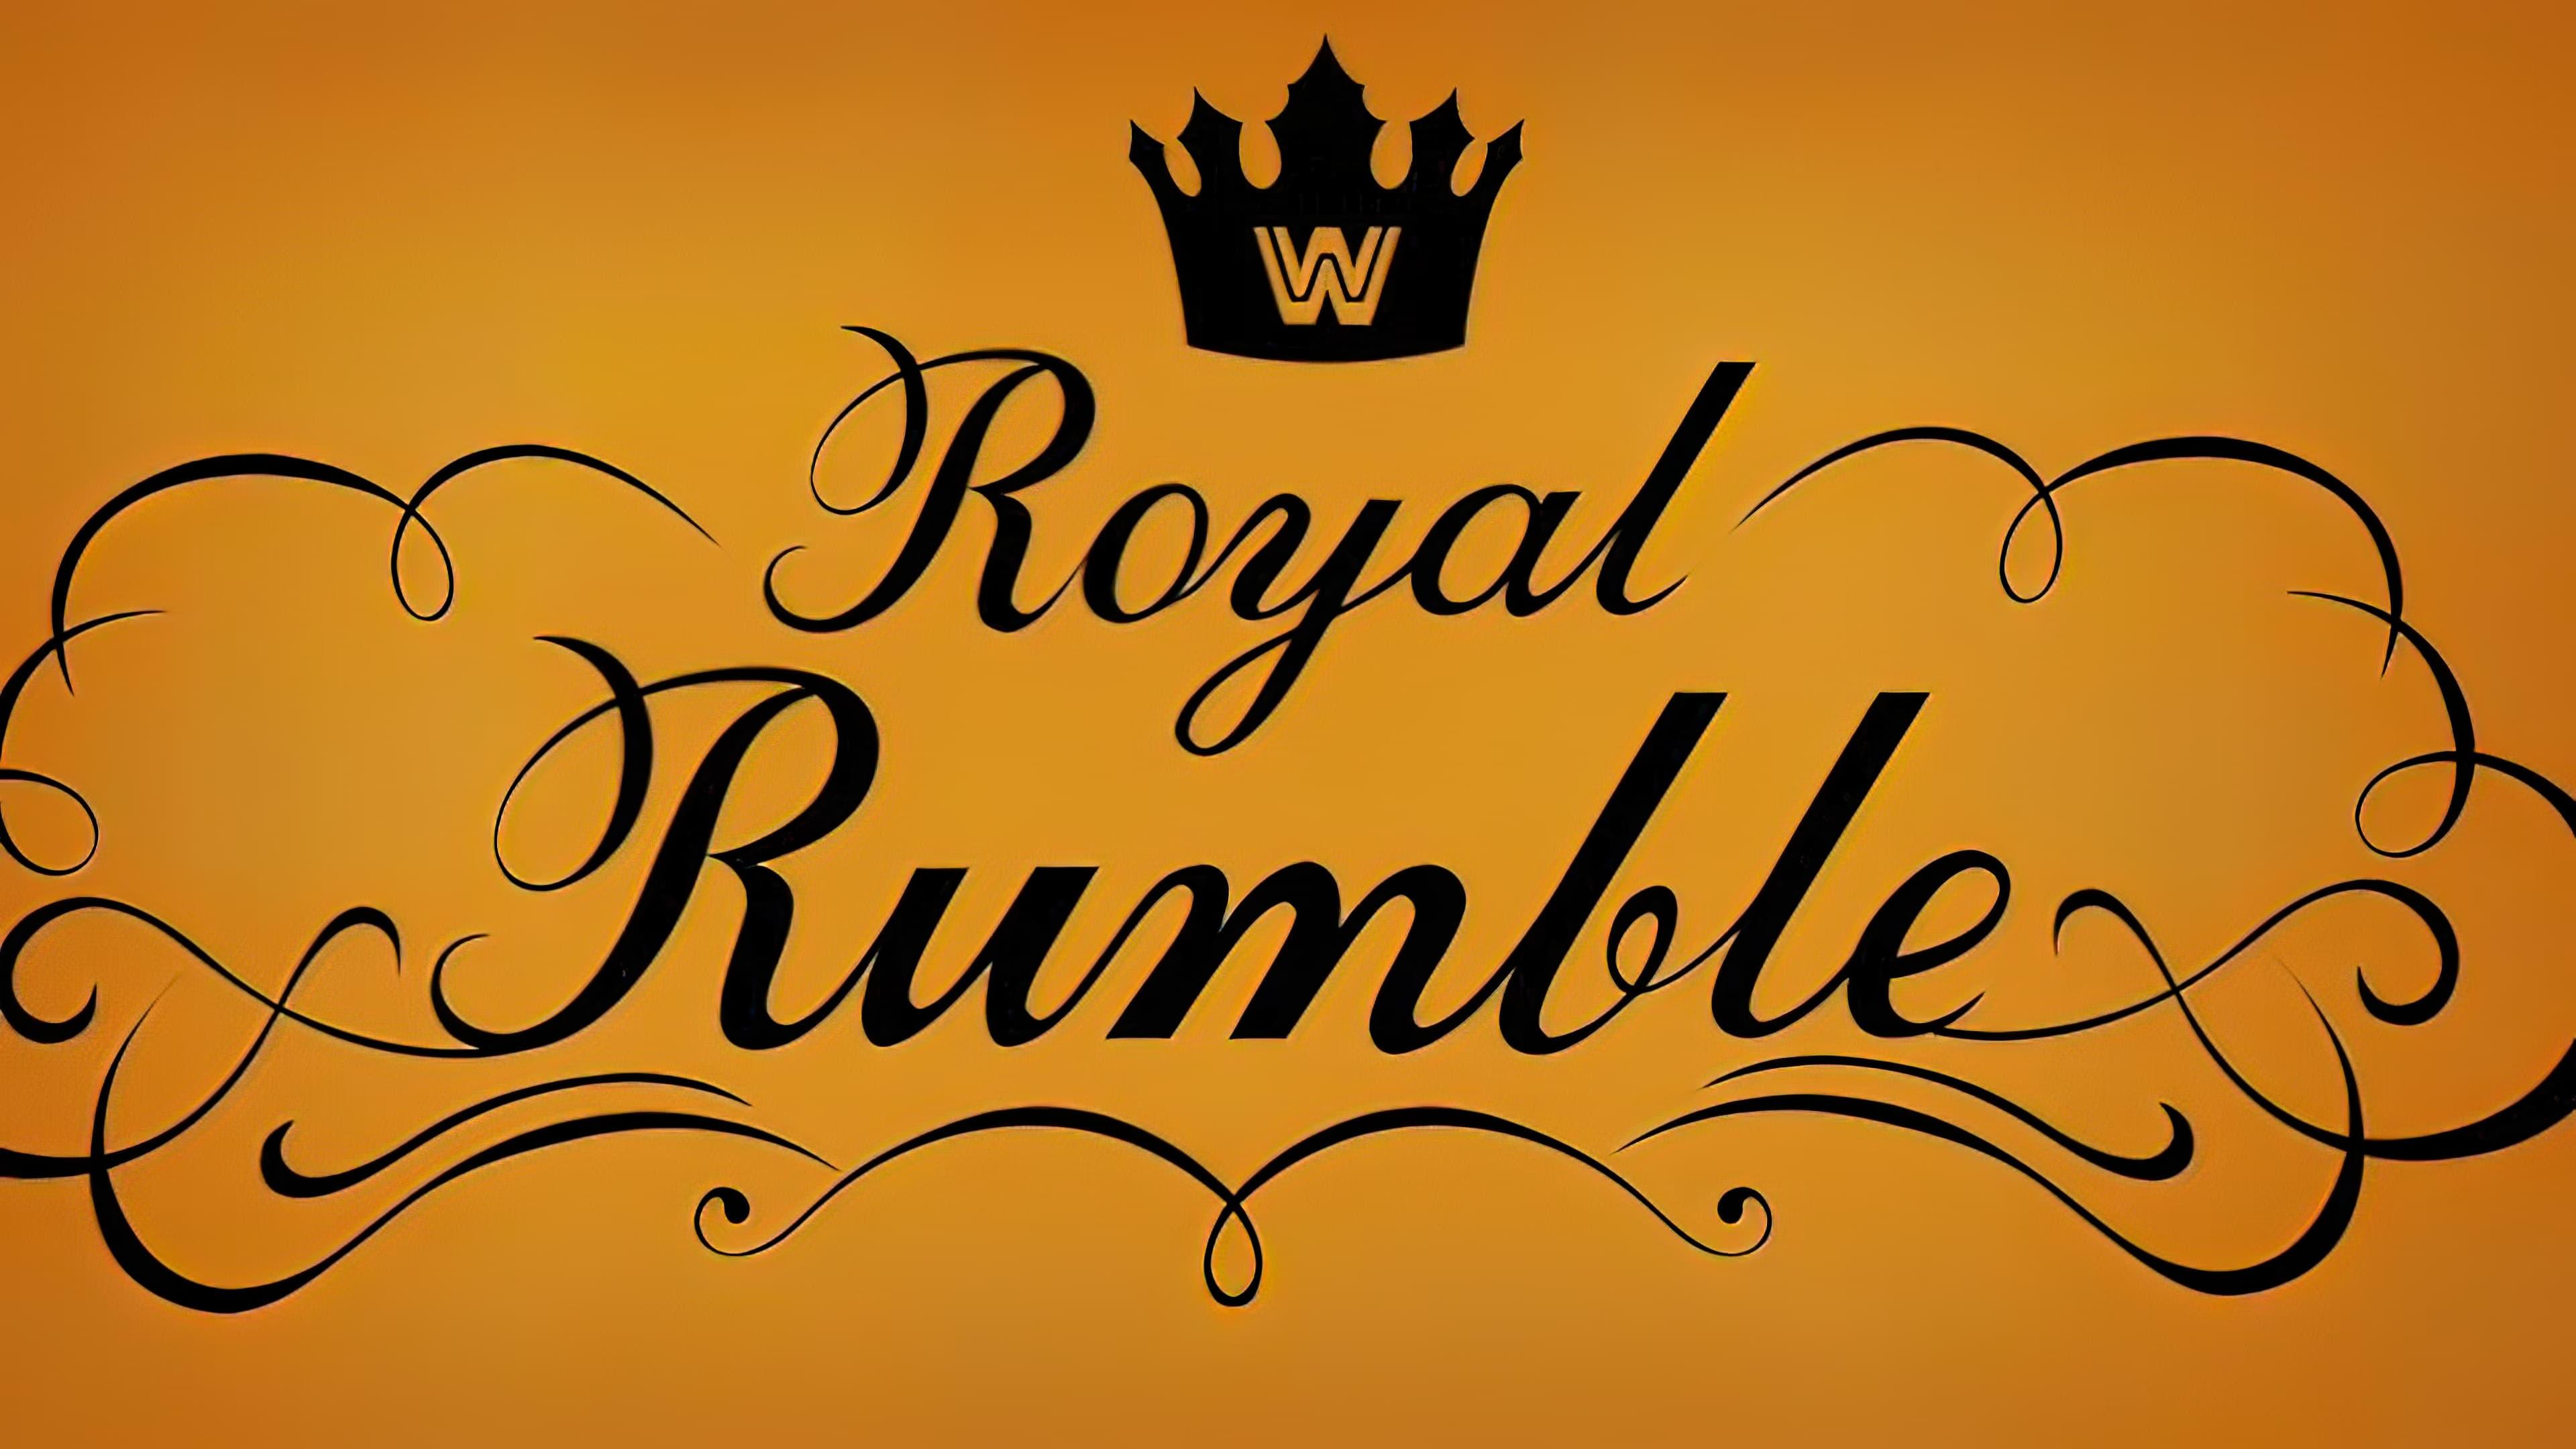 WWE Royal Rumble backdrop